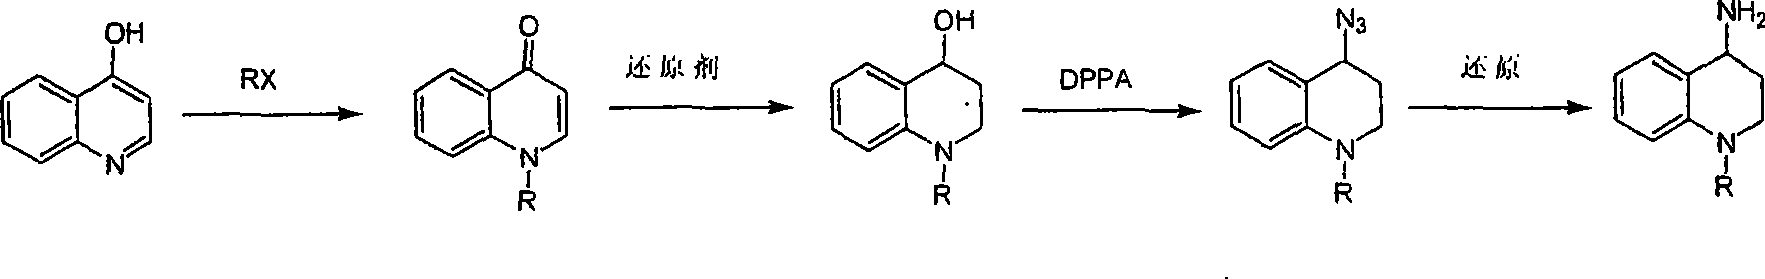 Synthesis of 1-R-4-amino-1,2,3,4-tetrahydroquinoline